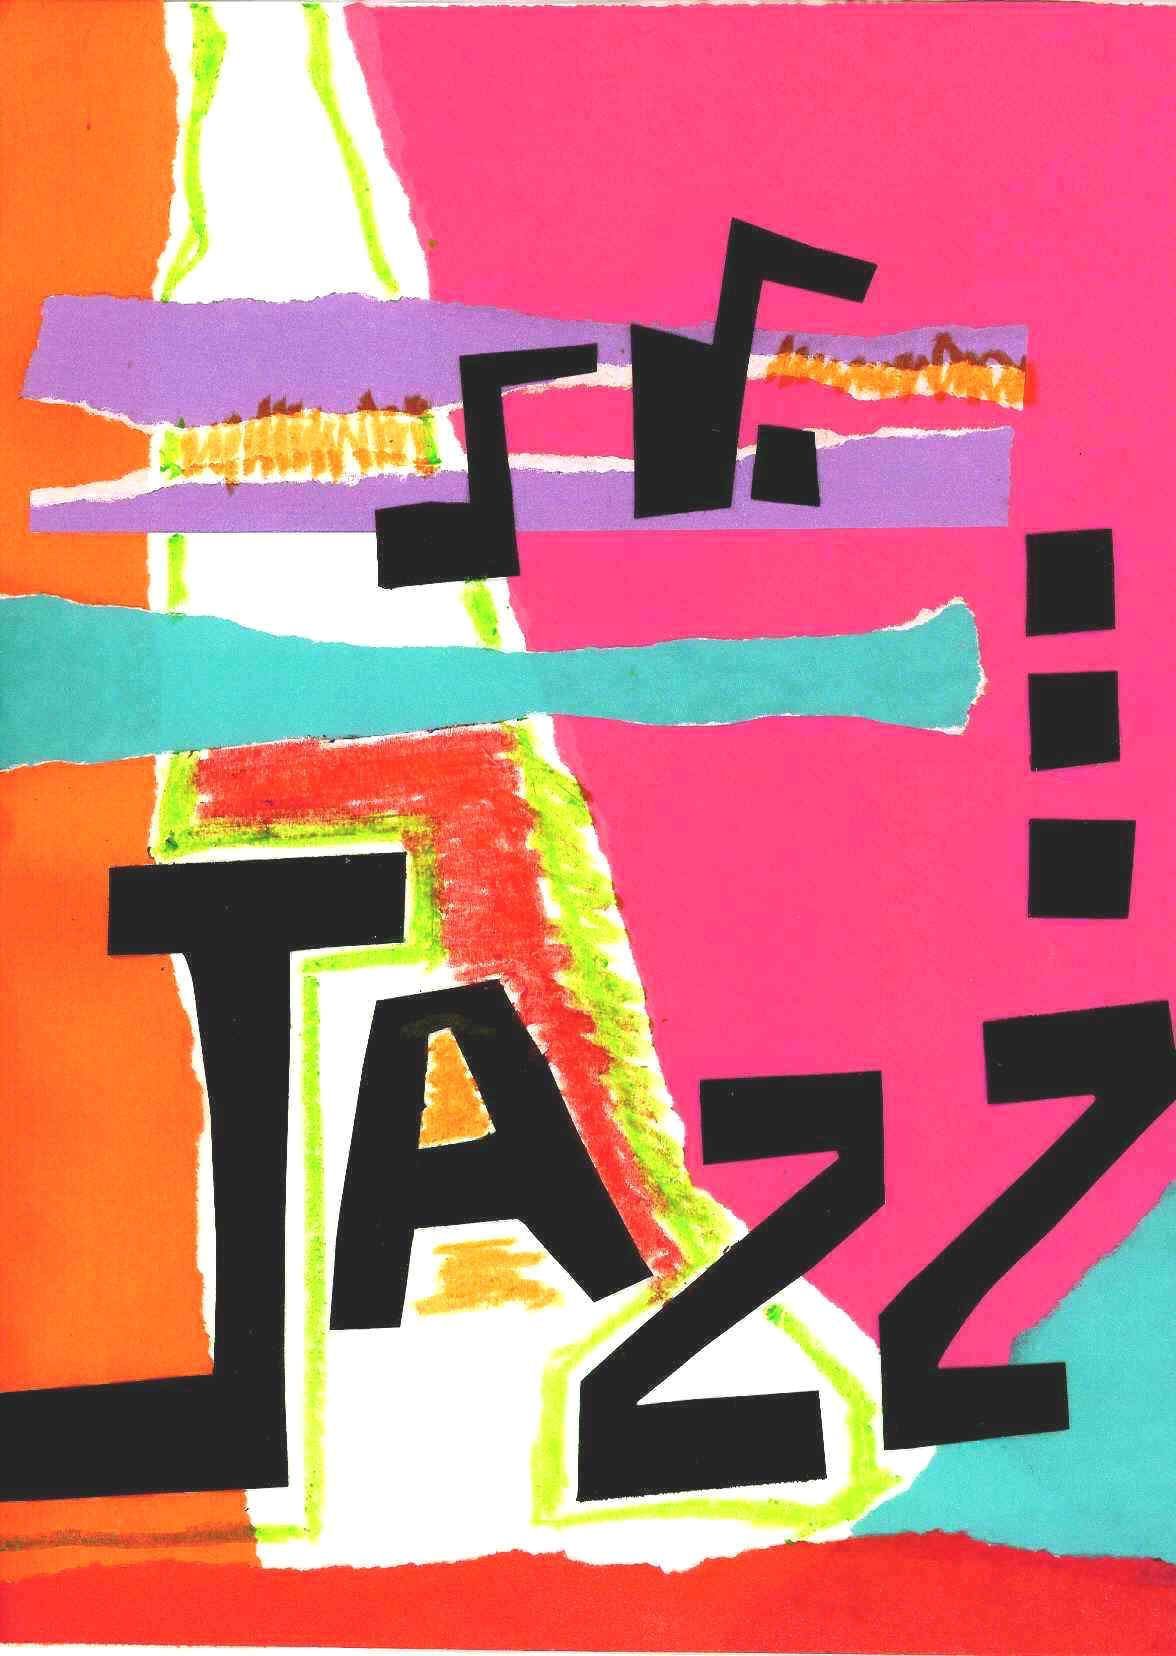 Vintage Music Art Poster - Jazz - 0561 - Vintage Music Art Poster - Jazz - 0561 -   15 fitness Art poster ideas